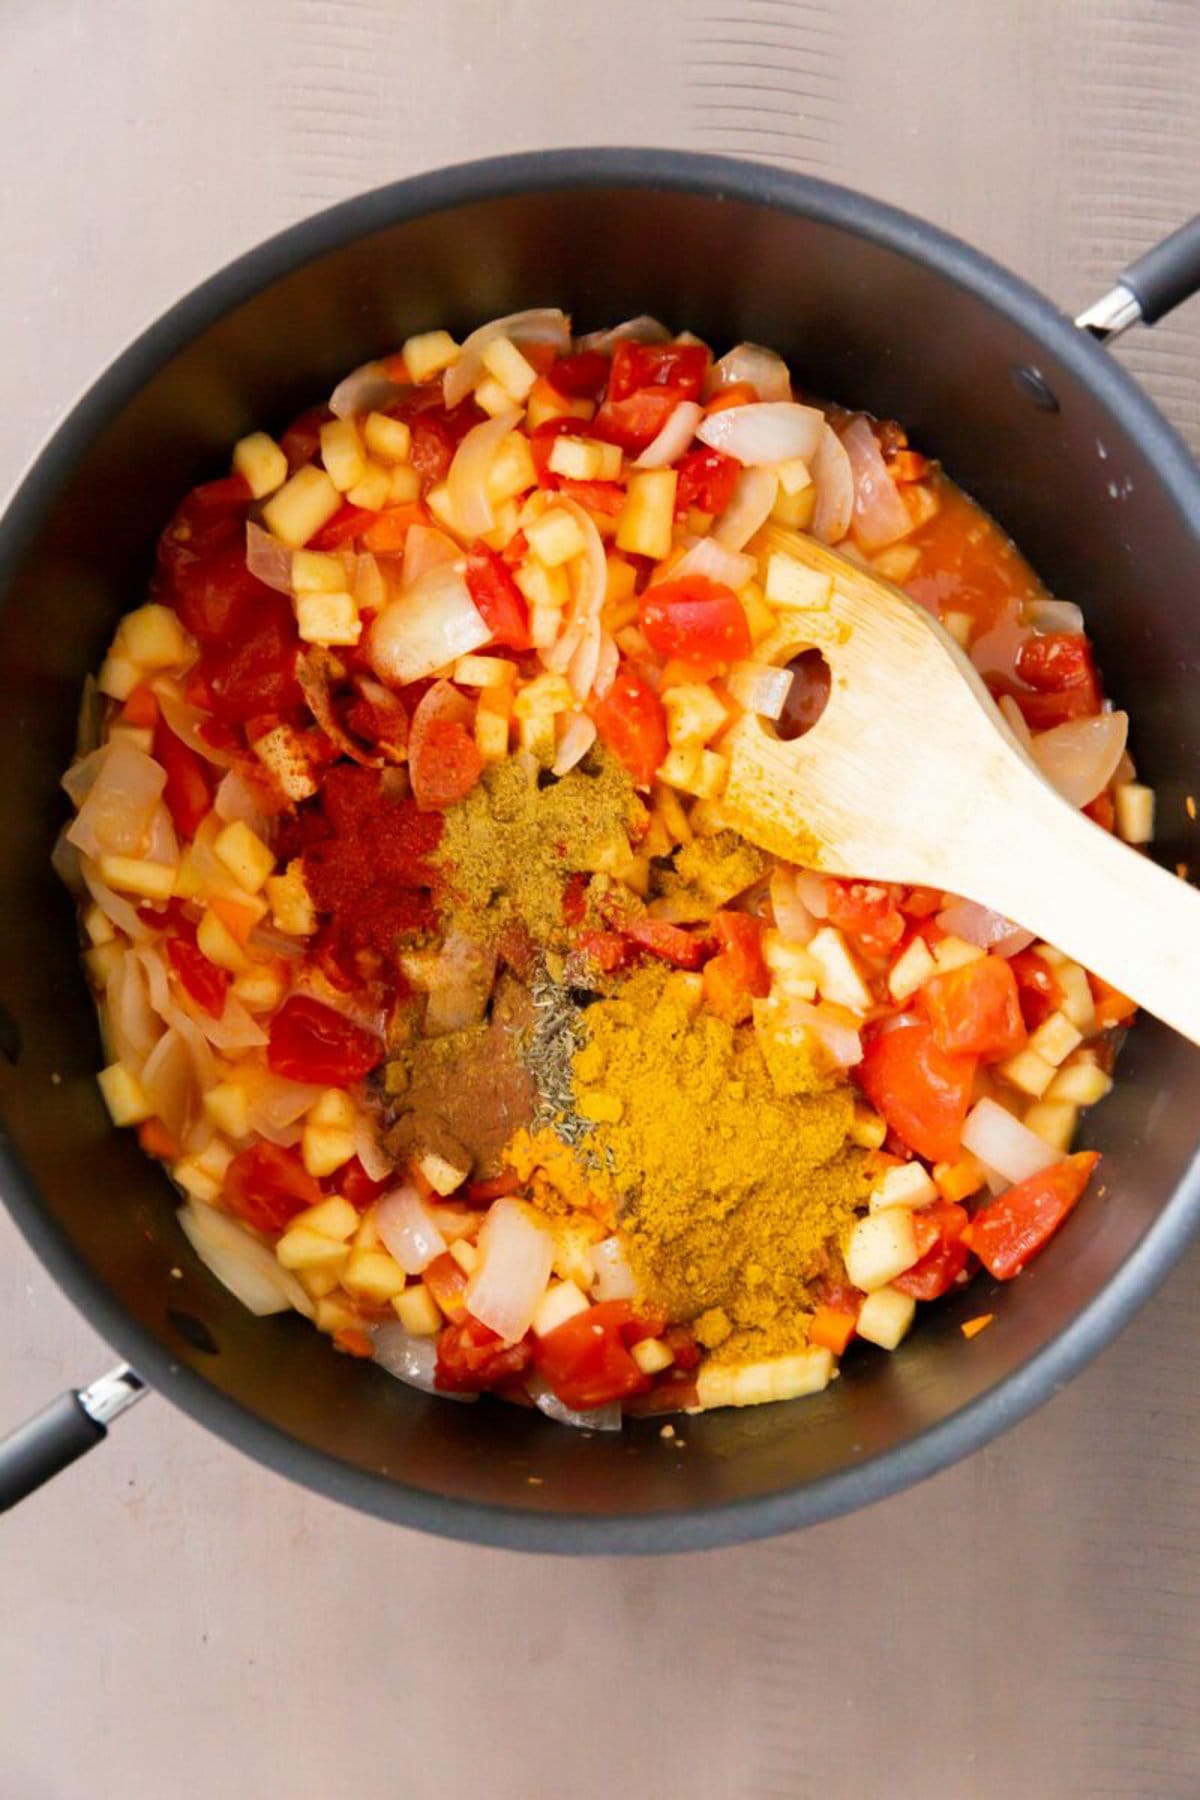 Spices added into the Mulligatawny Soup pot.